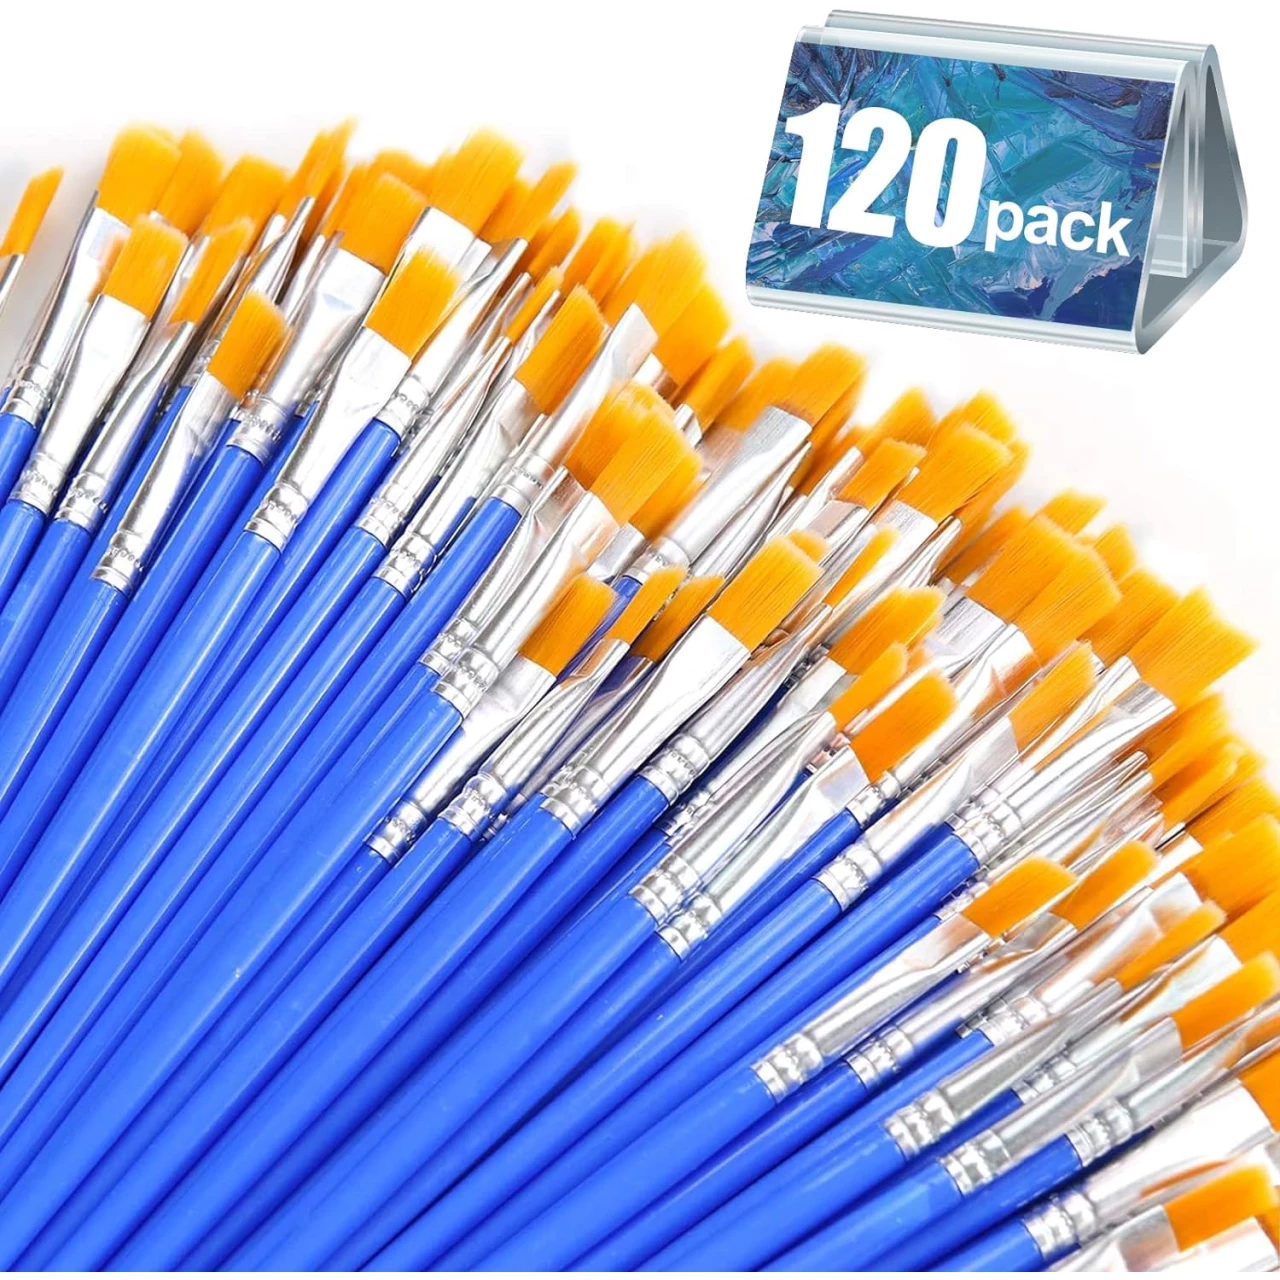 AROIC Paint Brushes Set,120 pcs Nylon Hair Brushes for Acrylic Oil Watercolor Artist Professional Painting Kits